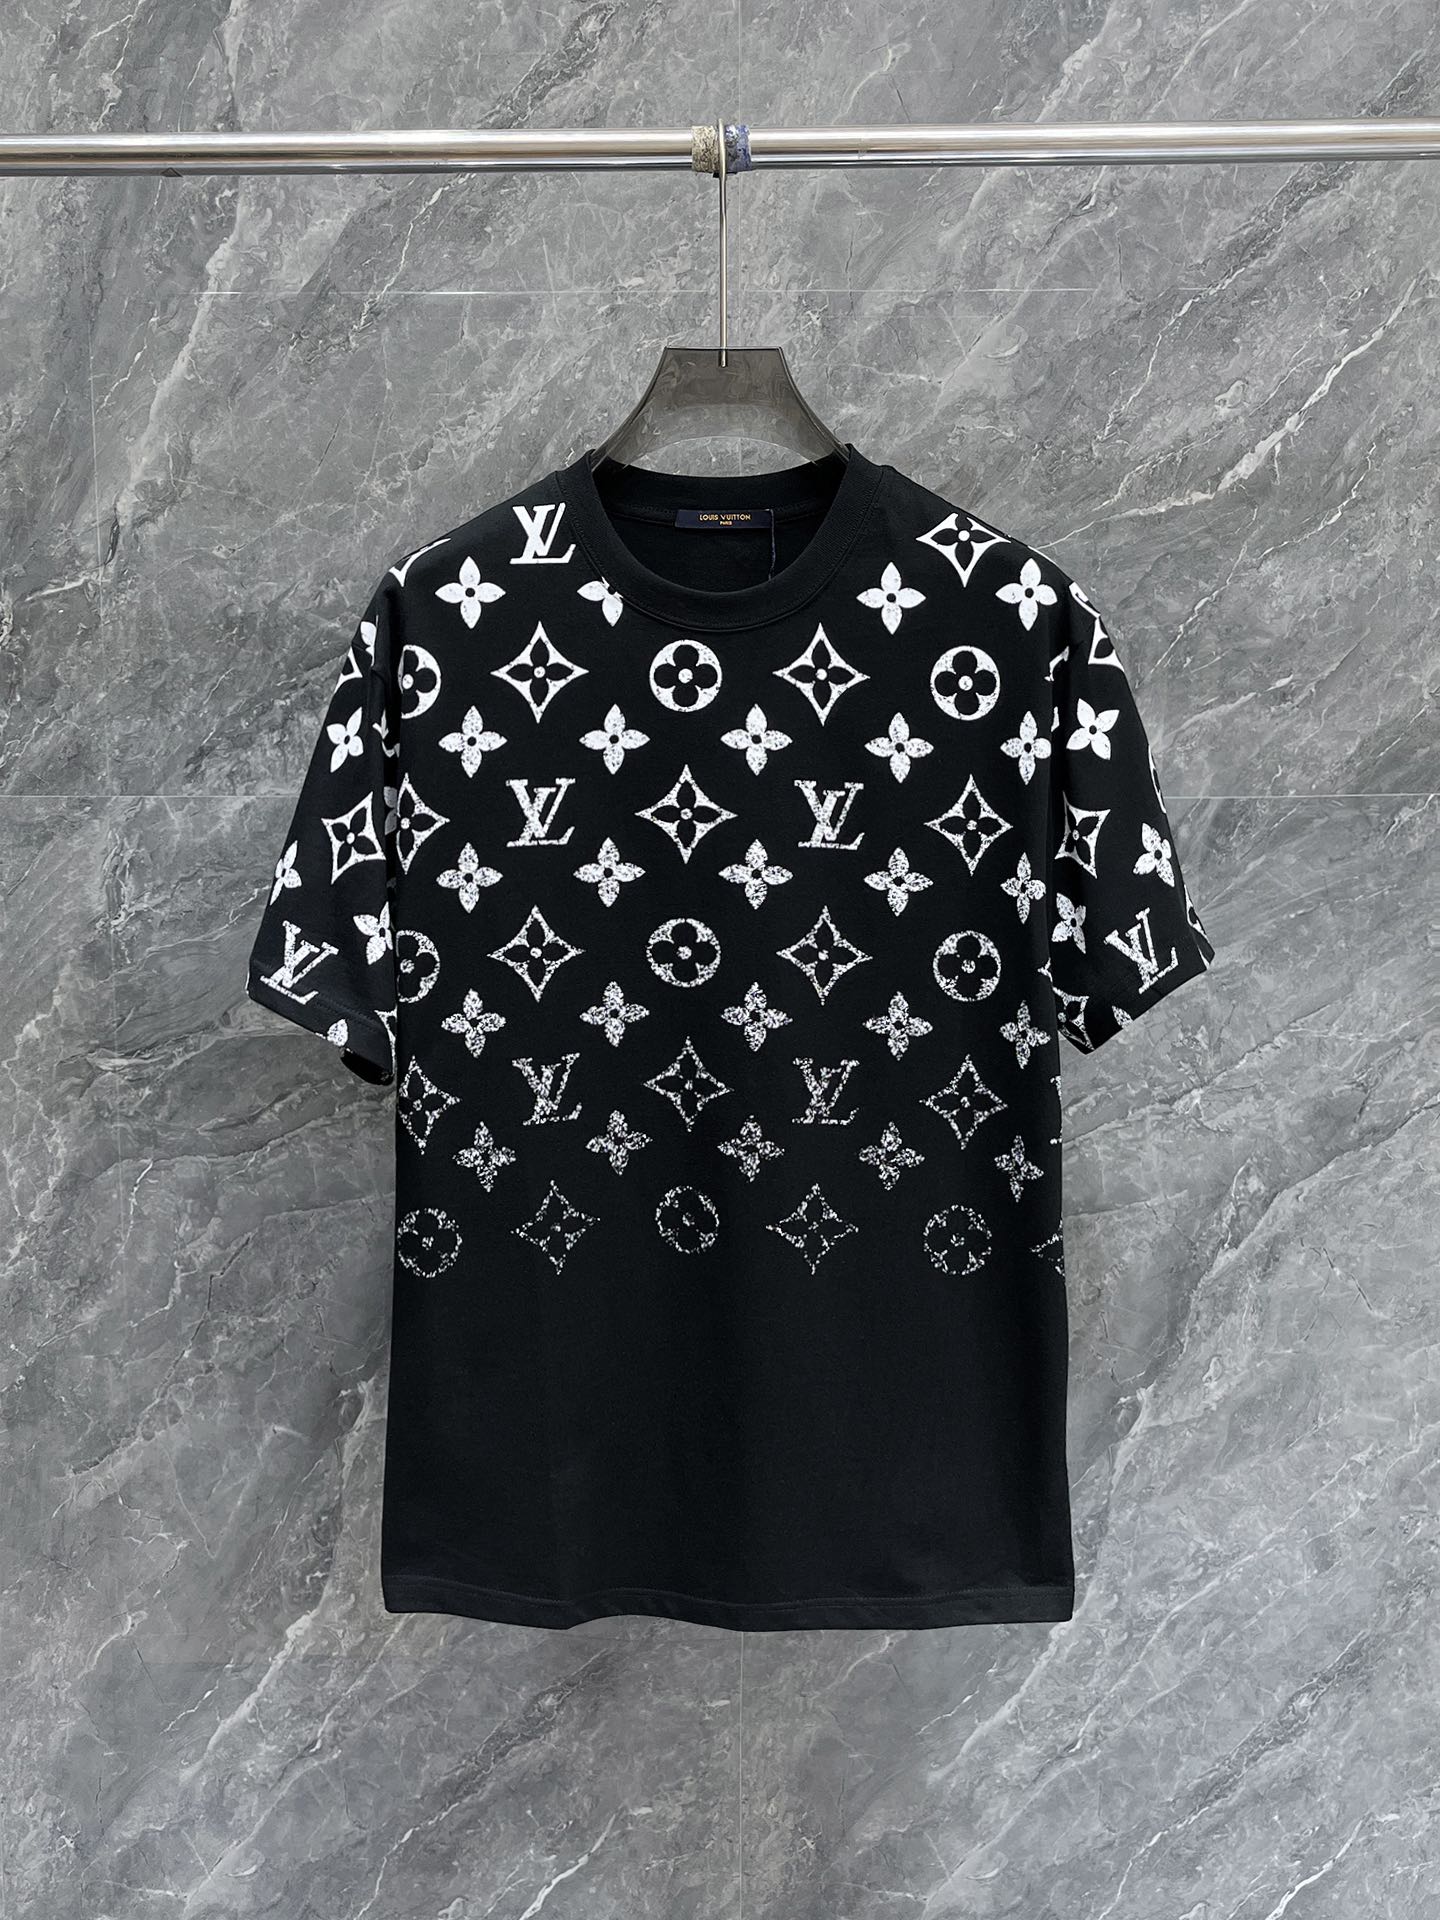 Louis Vuitton Designer
 Clothing T-Shirt Black White Printing Cotton Short Sleeve